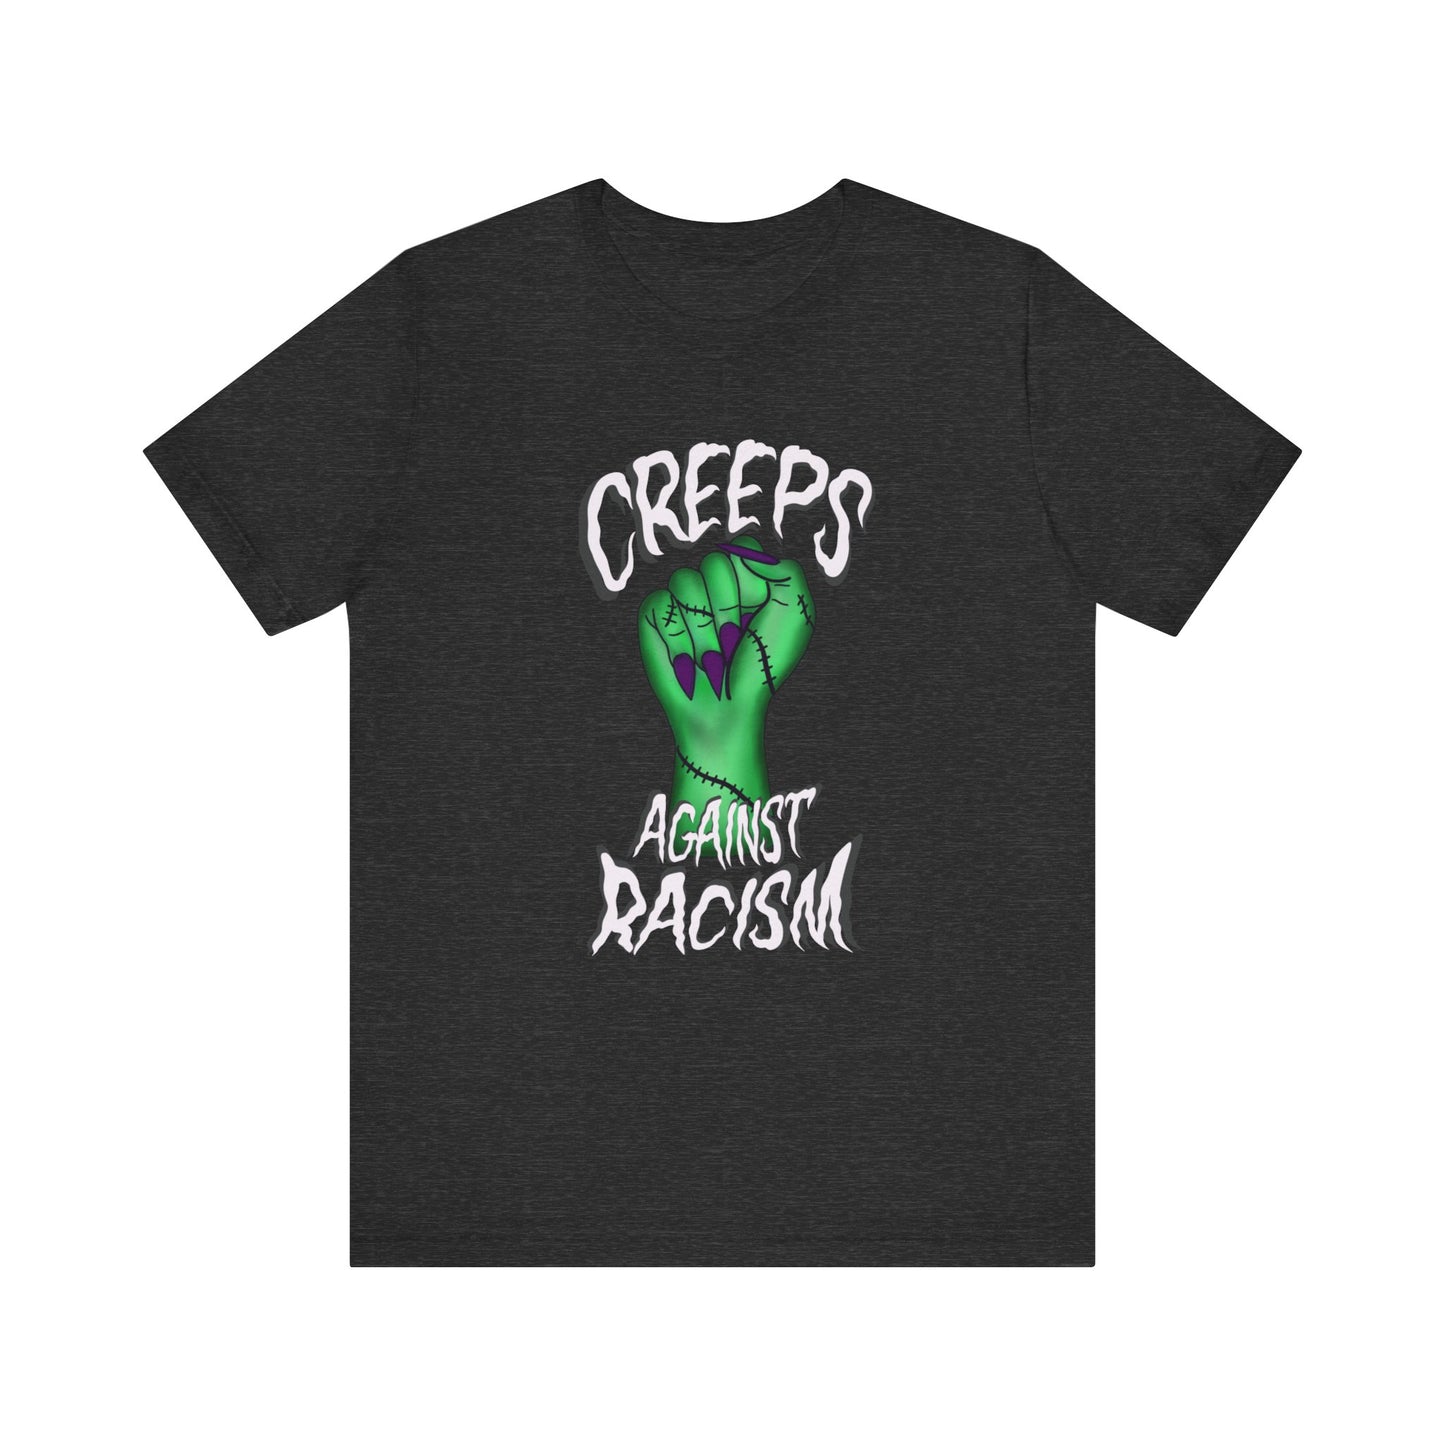 Creeps Against Racism T-shirt